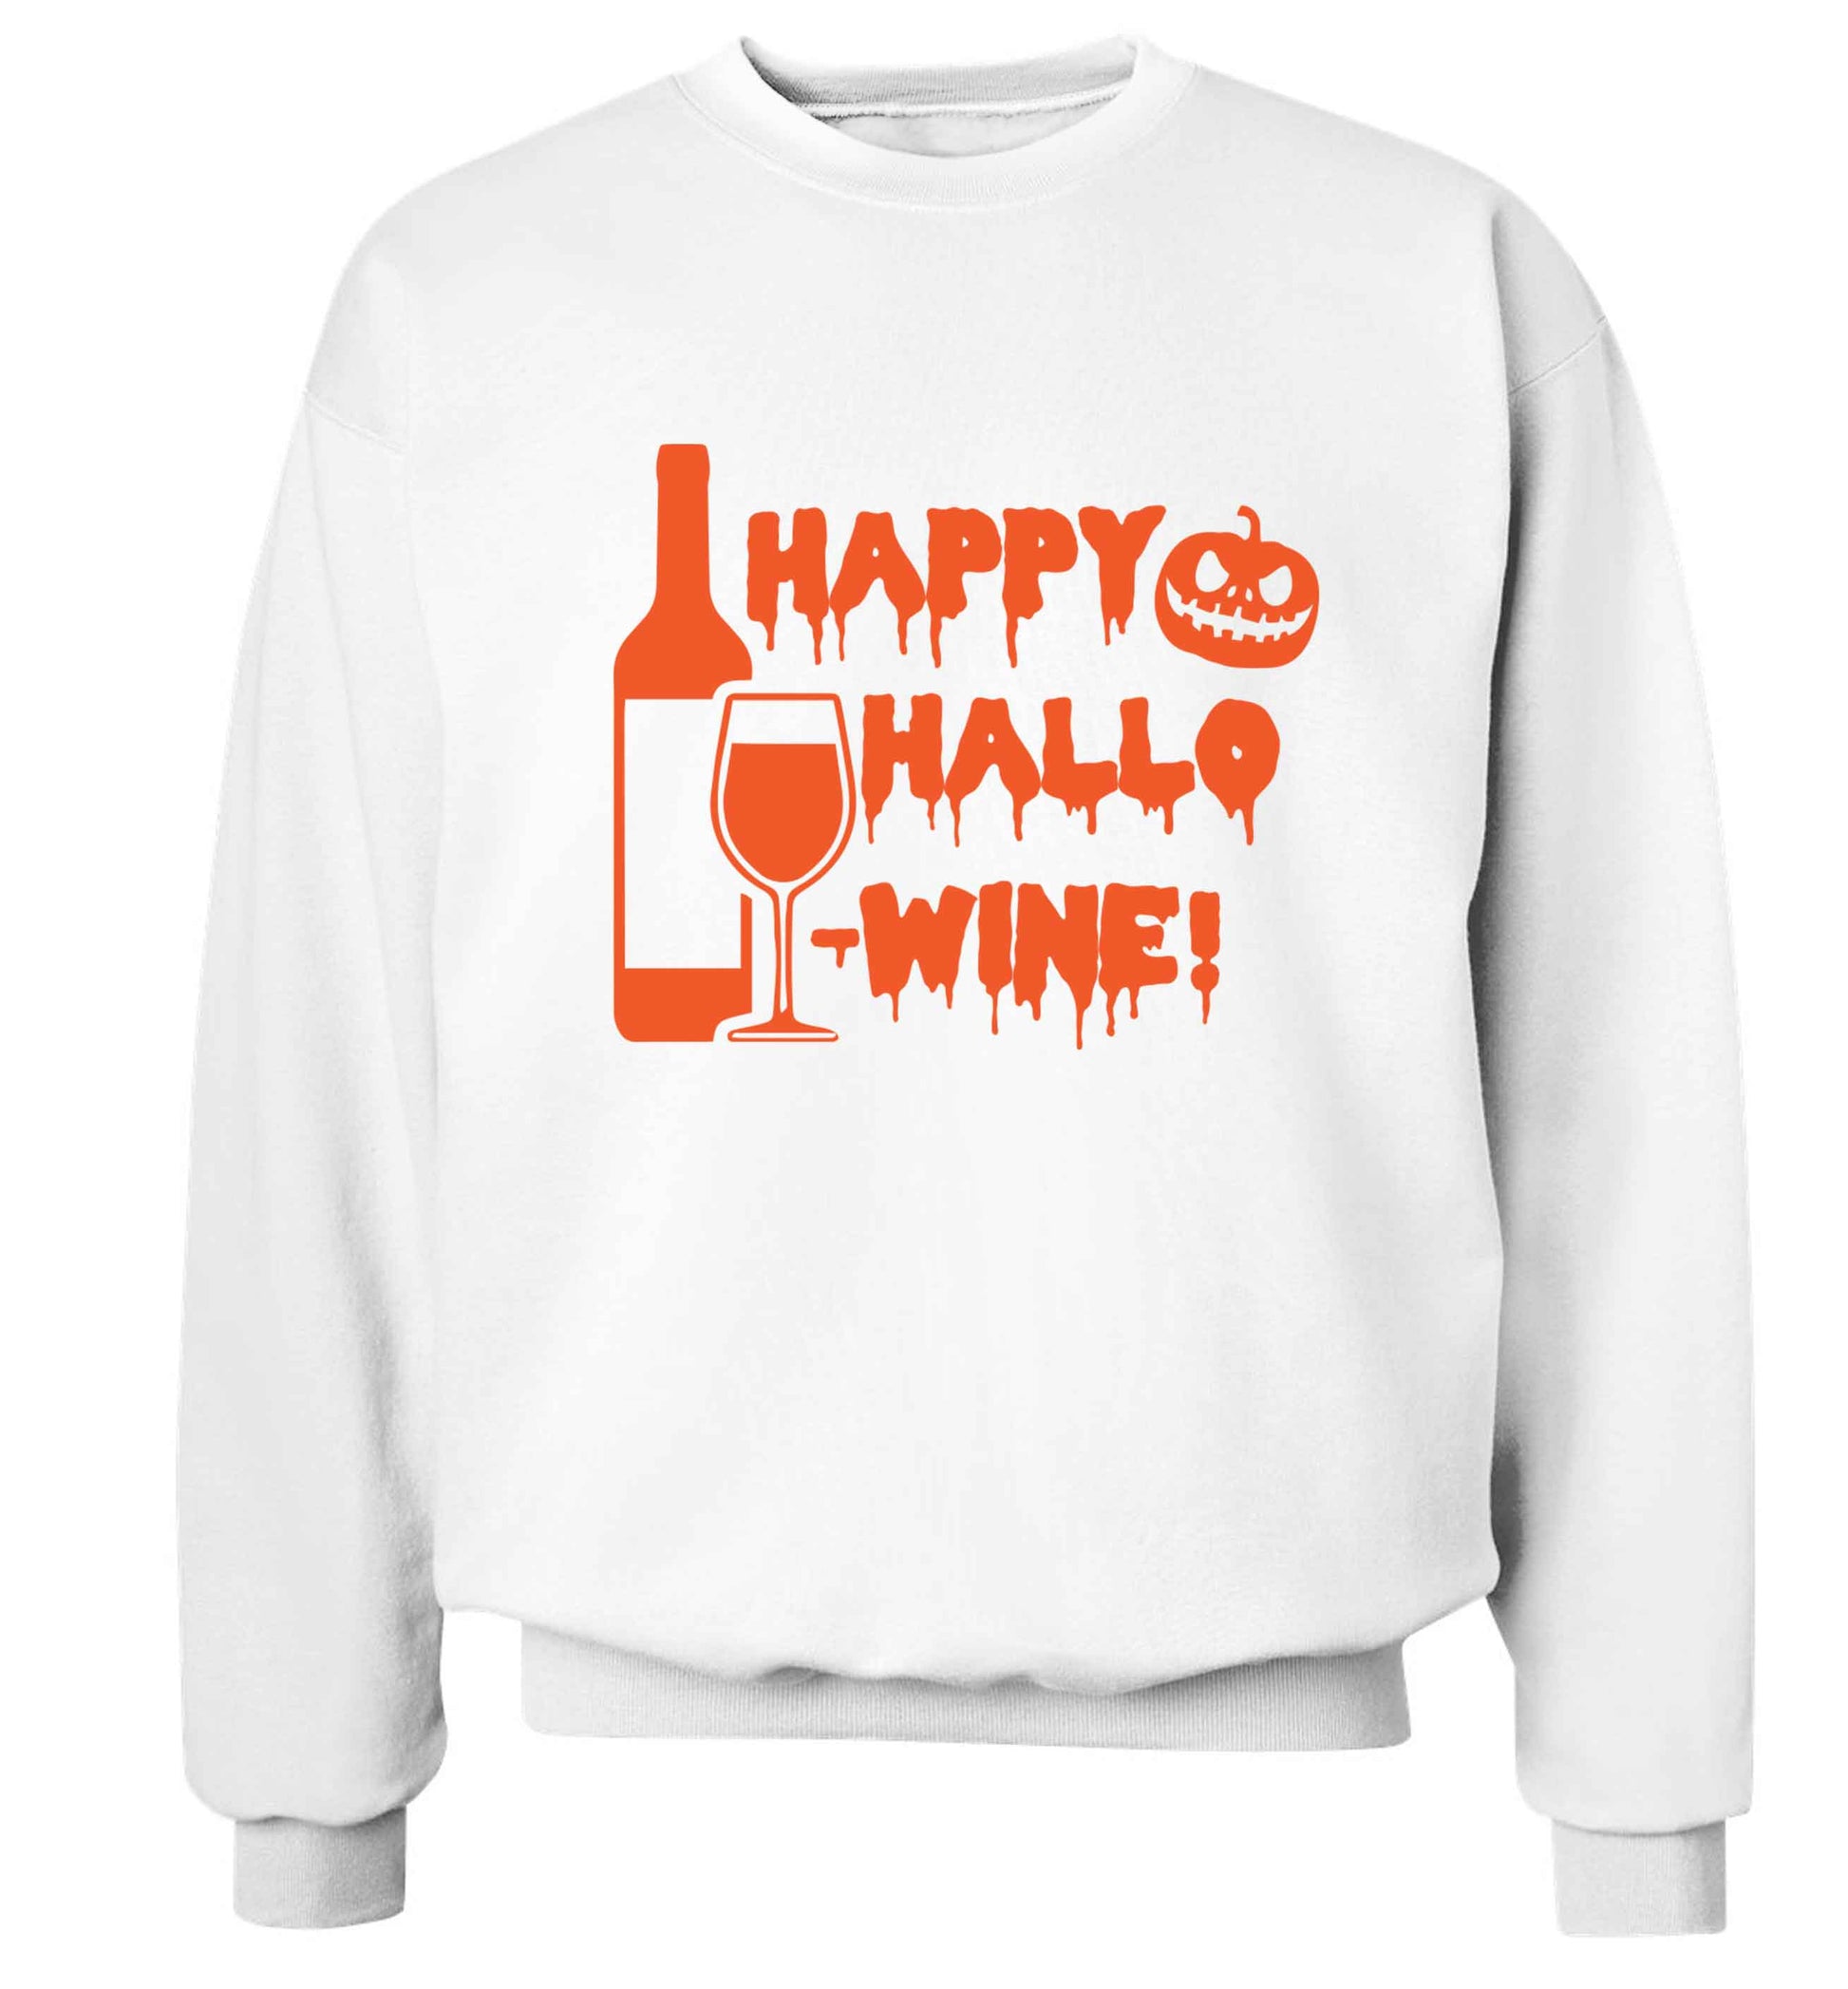 Happy hallow-wine Adult's unisex white Sweater 2XL